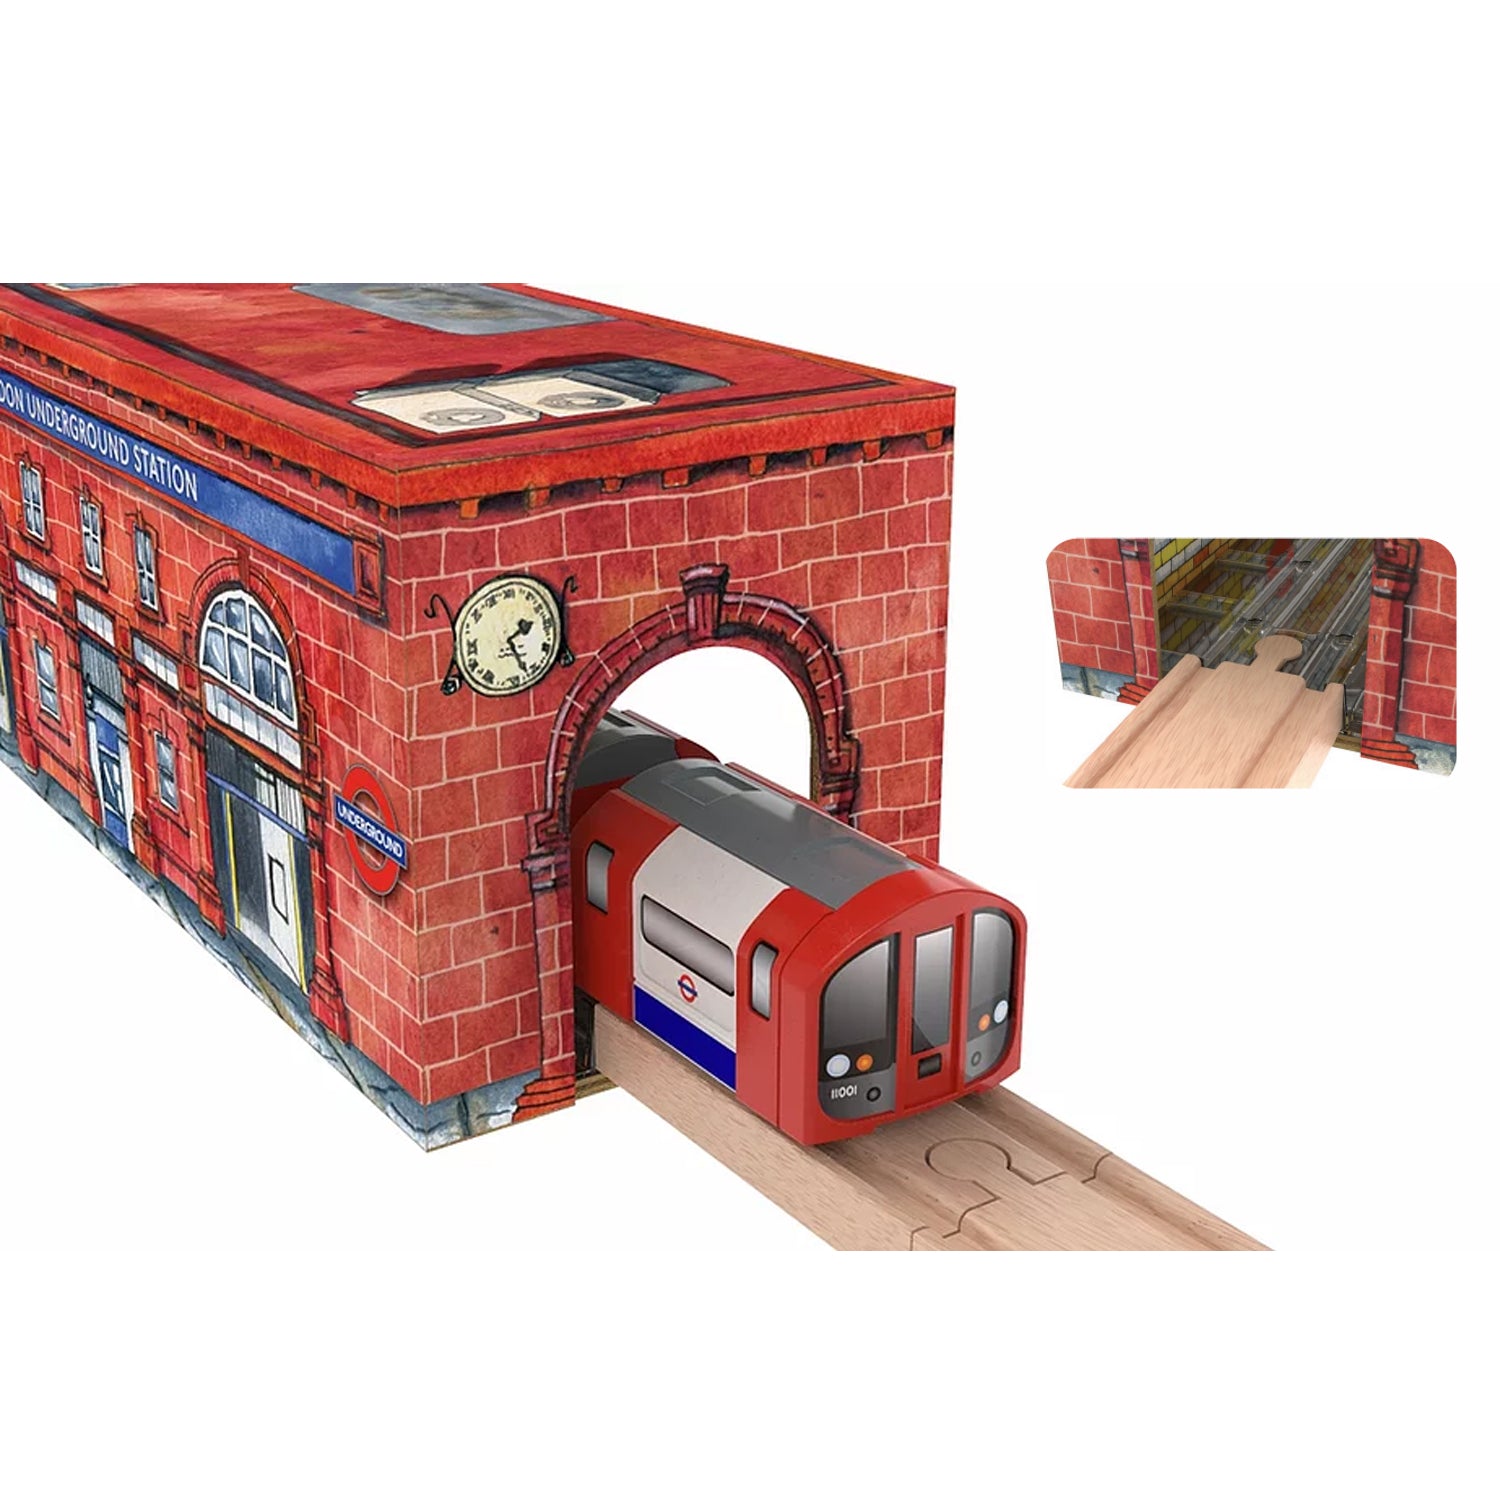 London Underground Train 3D Puzzle Toy 4